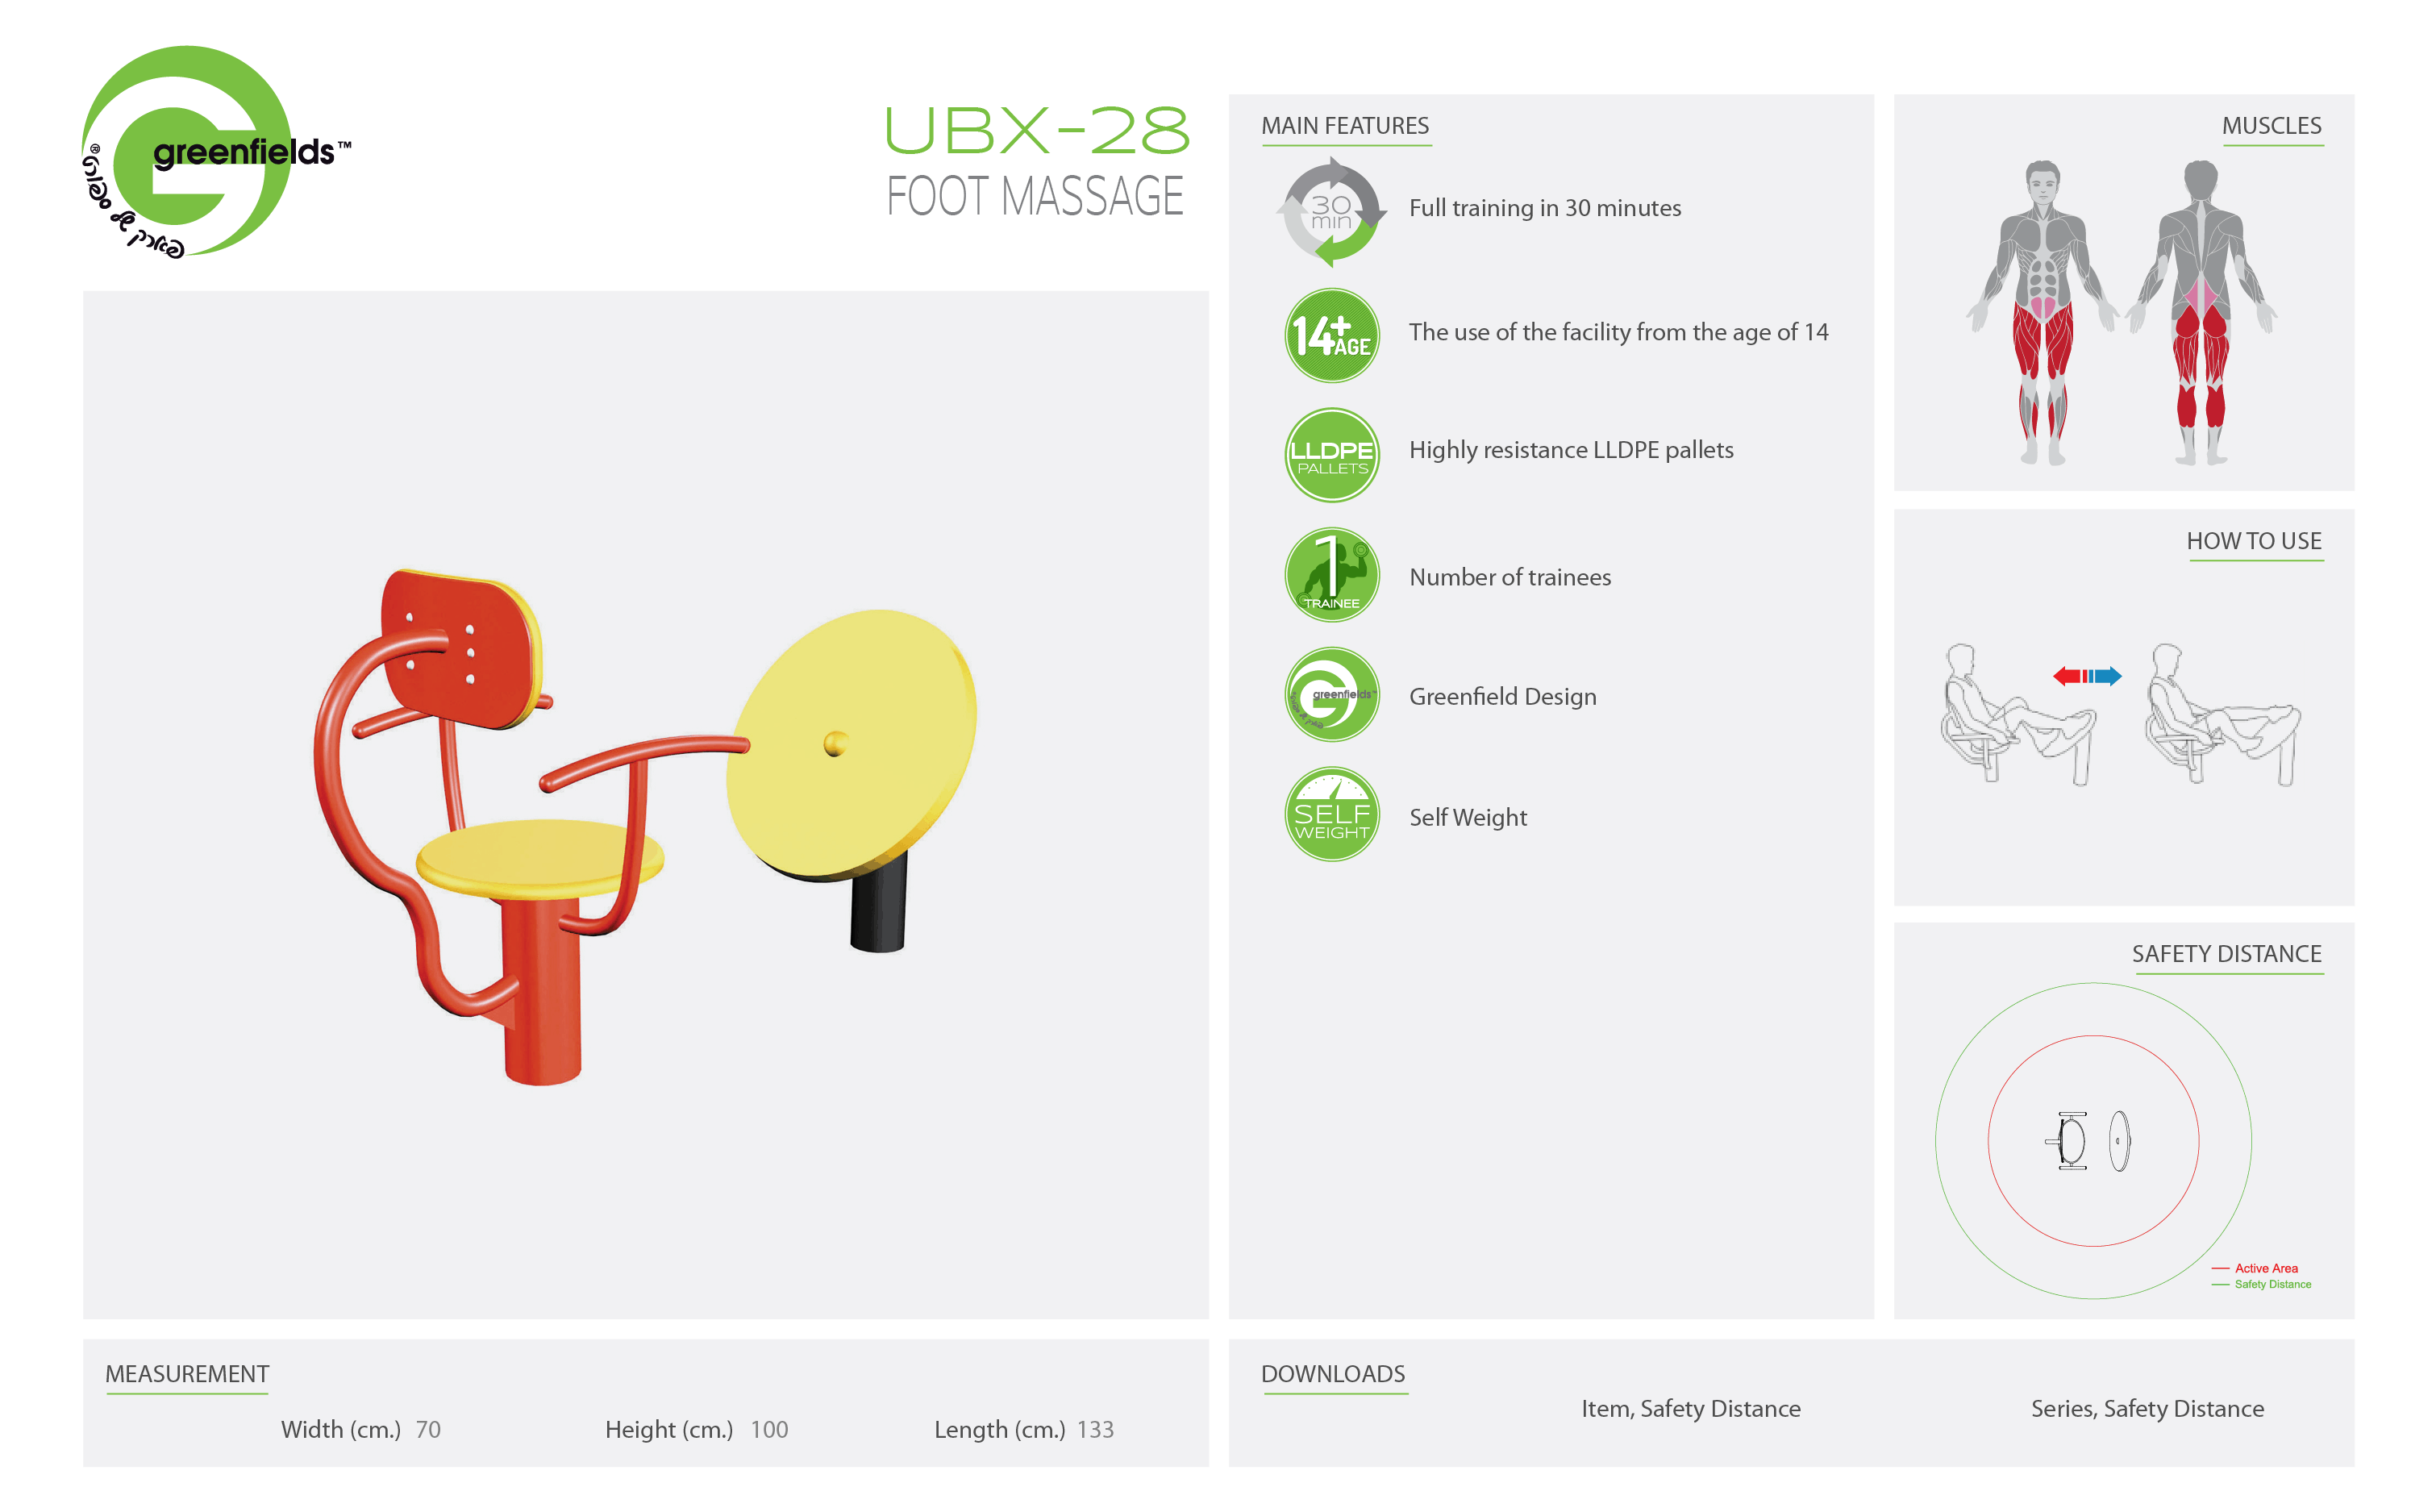 ubx-28 foot massage - אורבניקס - מתקן כושר - מתקן אימון לעקב וכף הרגל